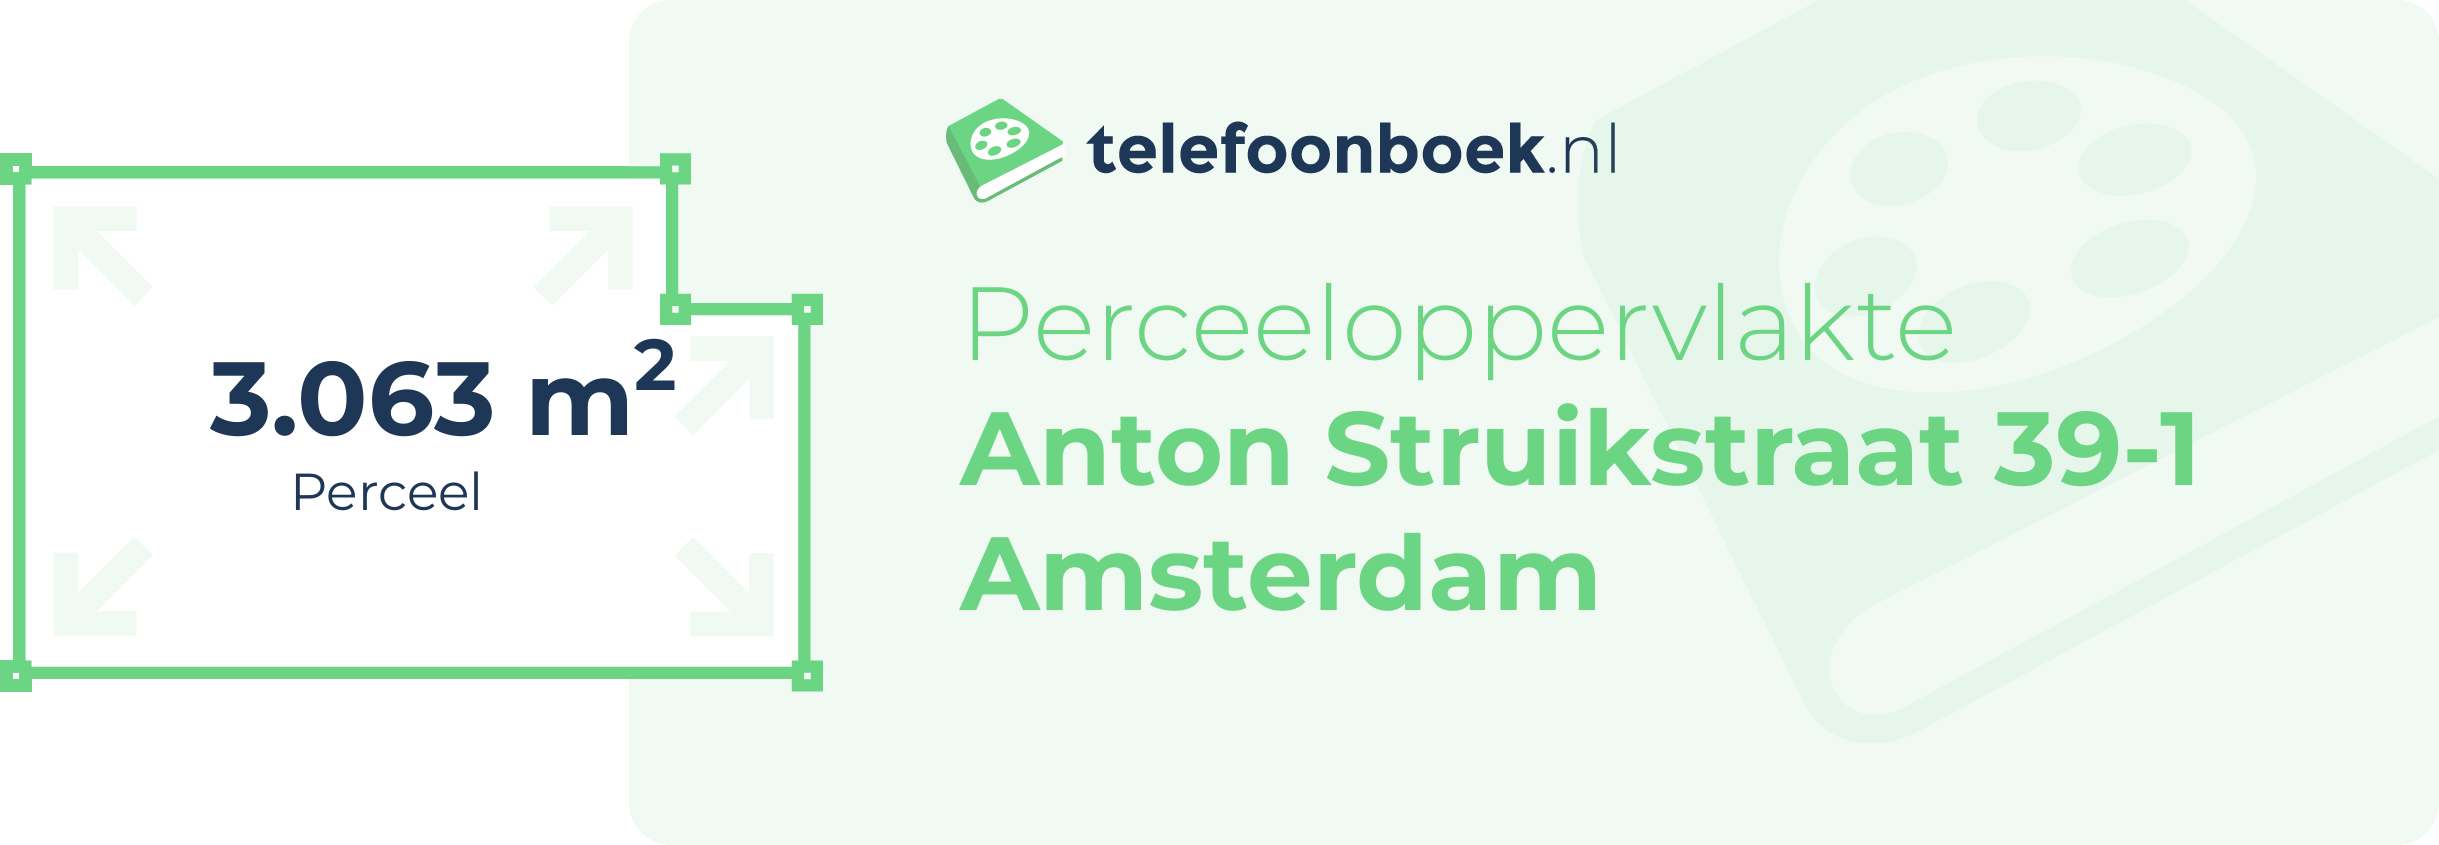 Perceeloppervlakte Anton Struikstraat 39-1 Amsterdam